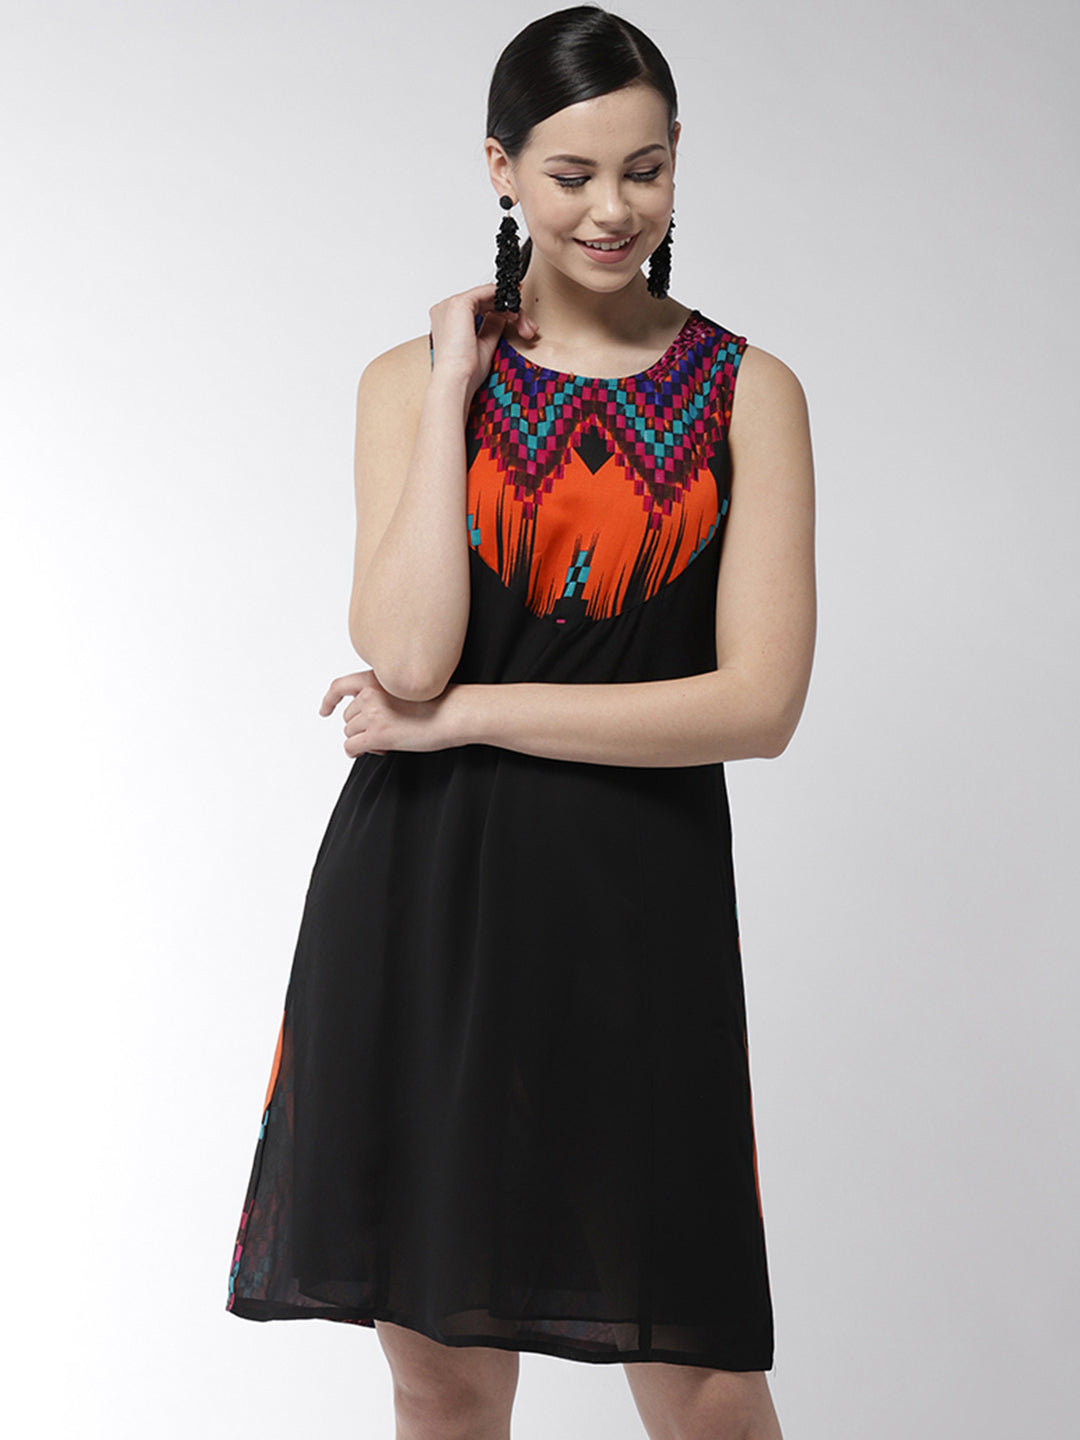 Women's Multicolored Aztec Print Dress - StyleStone